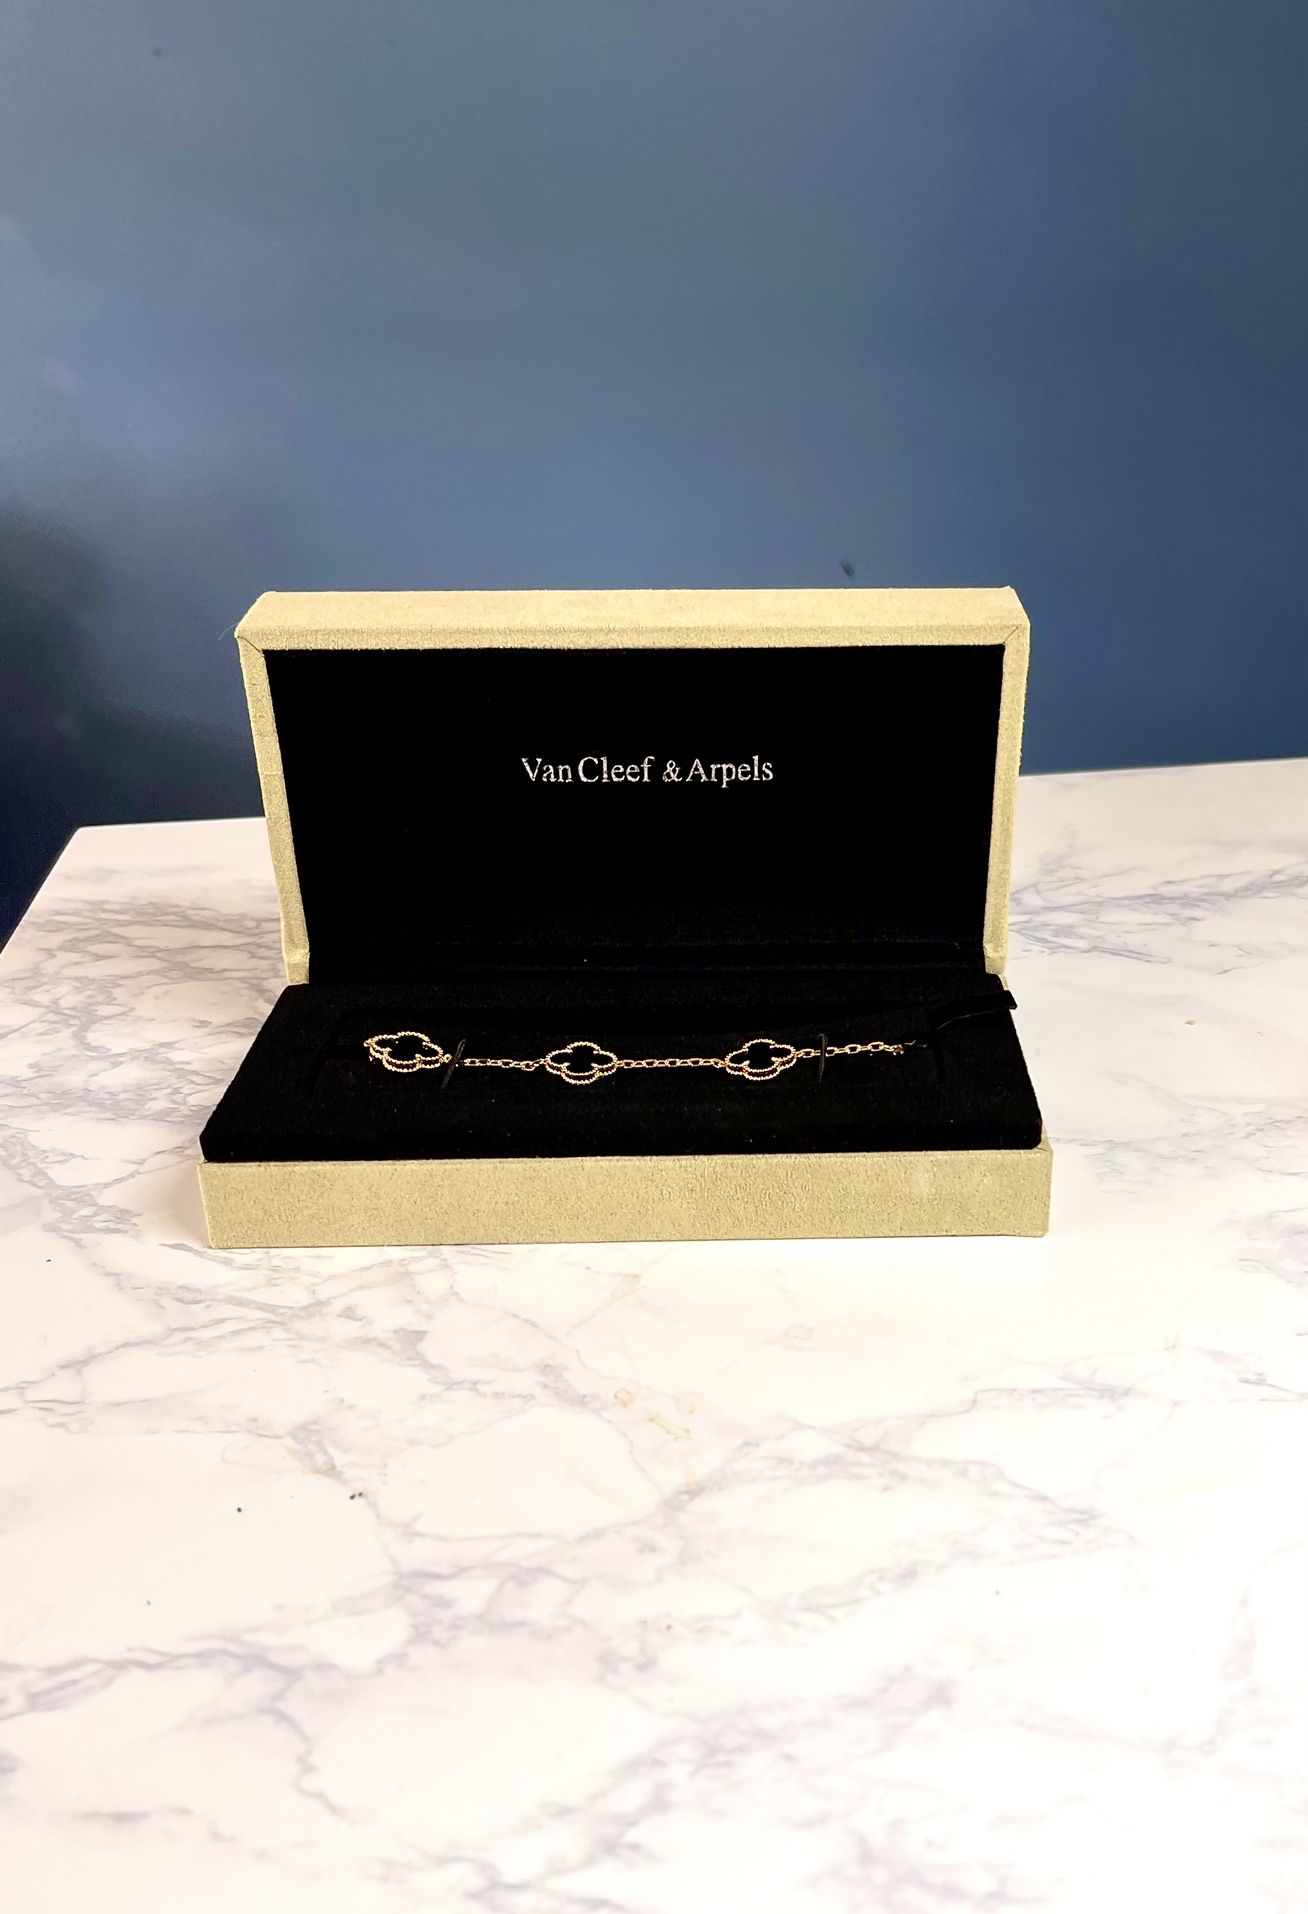 Van cleef & arpels bracelet gold for Sale in Austin, TX - OfferUp